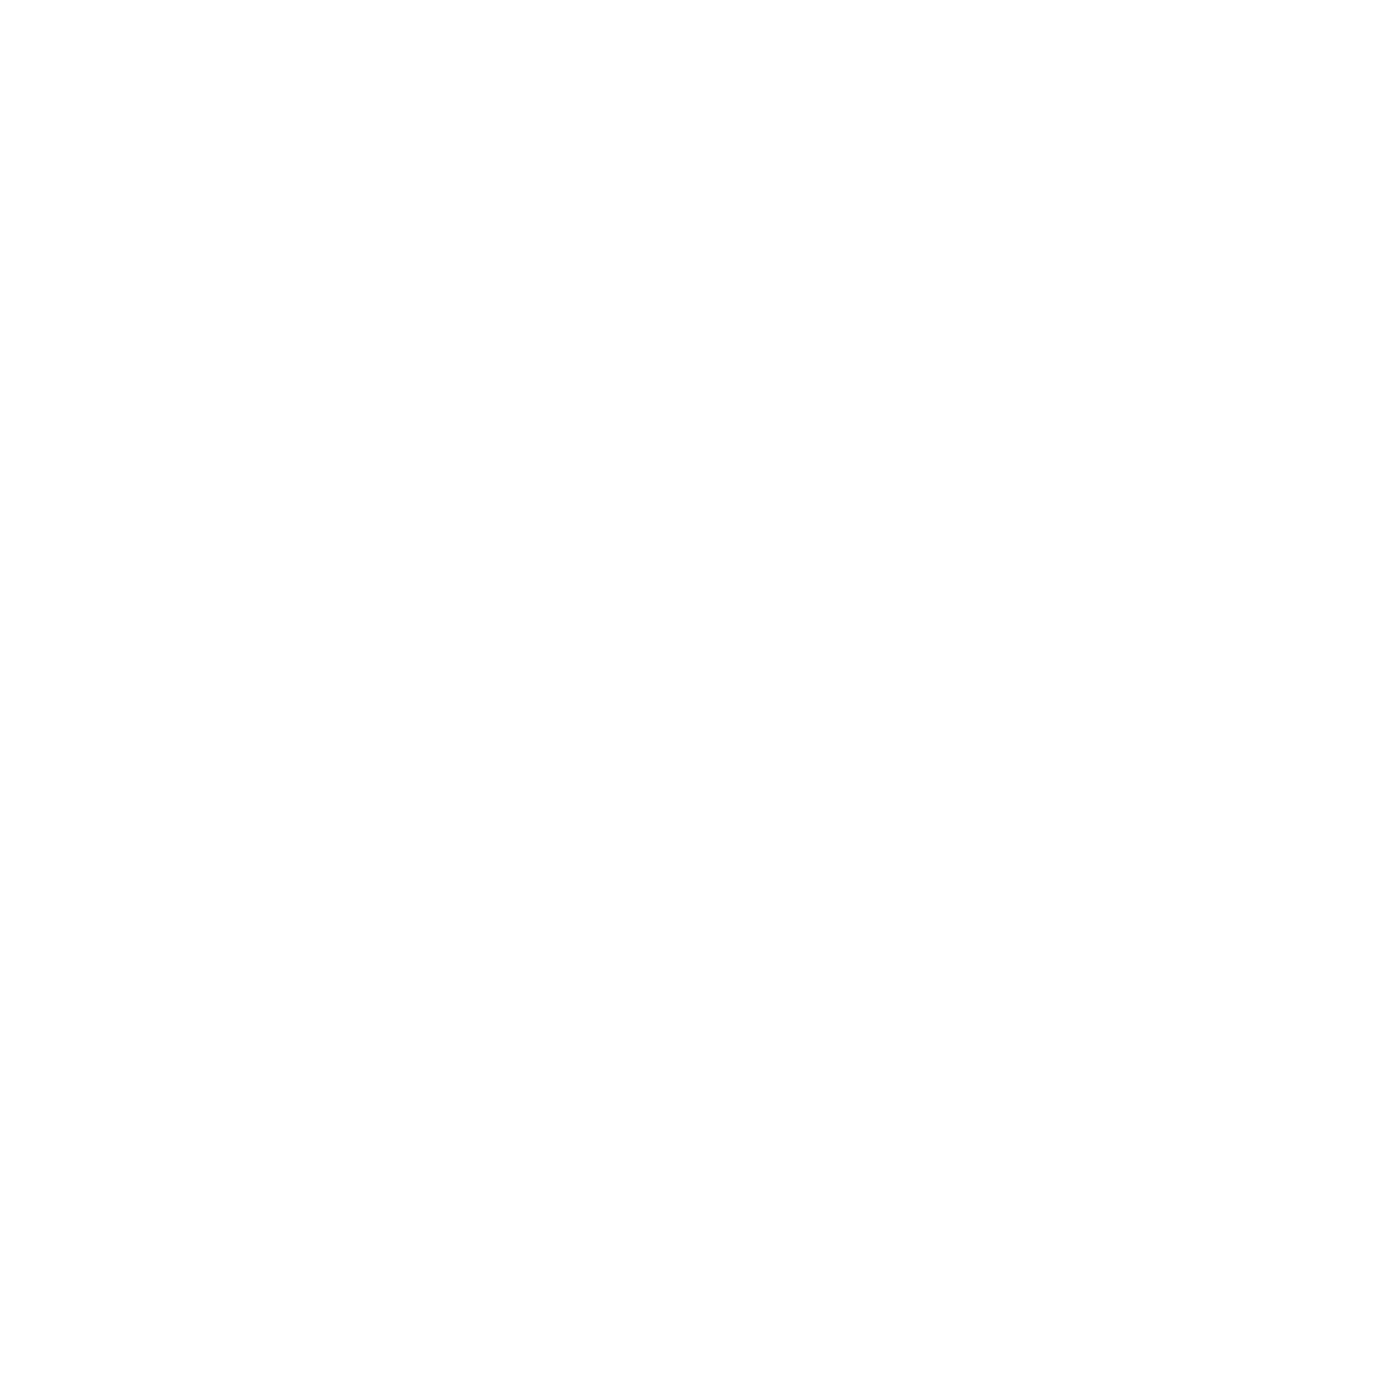 Bass Body and Soul Radio